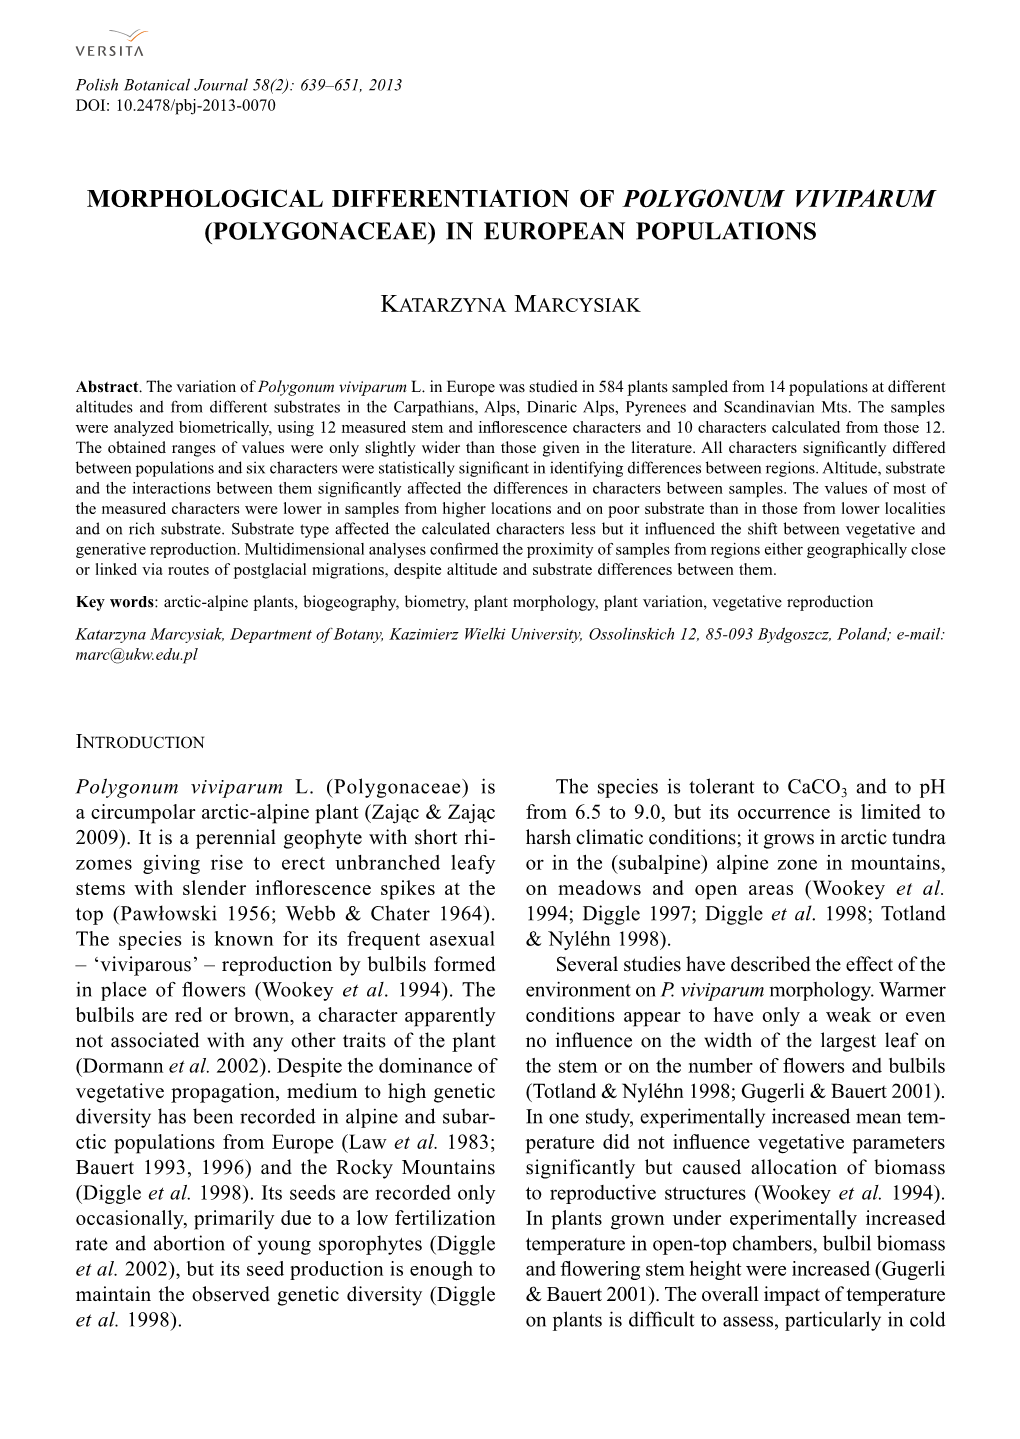 Morphological Differentiation of Polygonum Viviparum (Polygonaceae) in European Populations